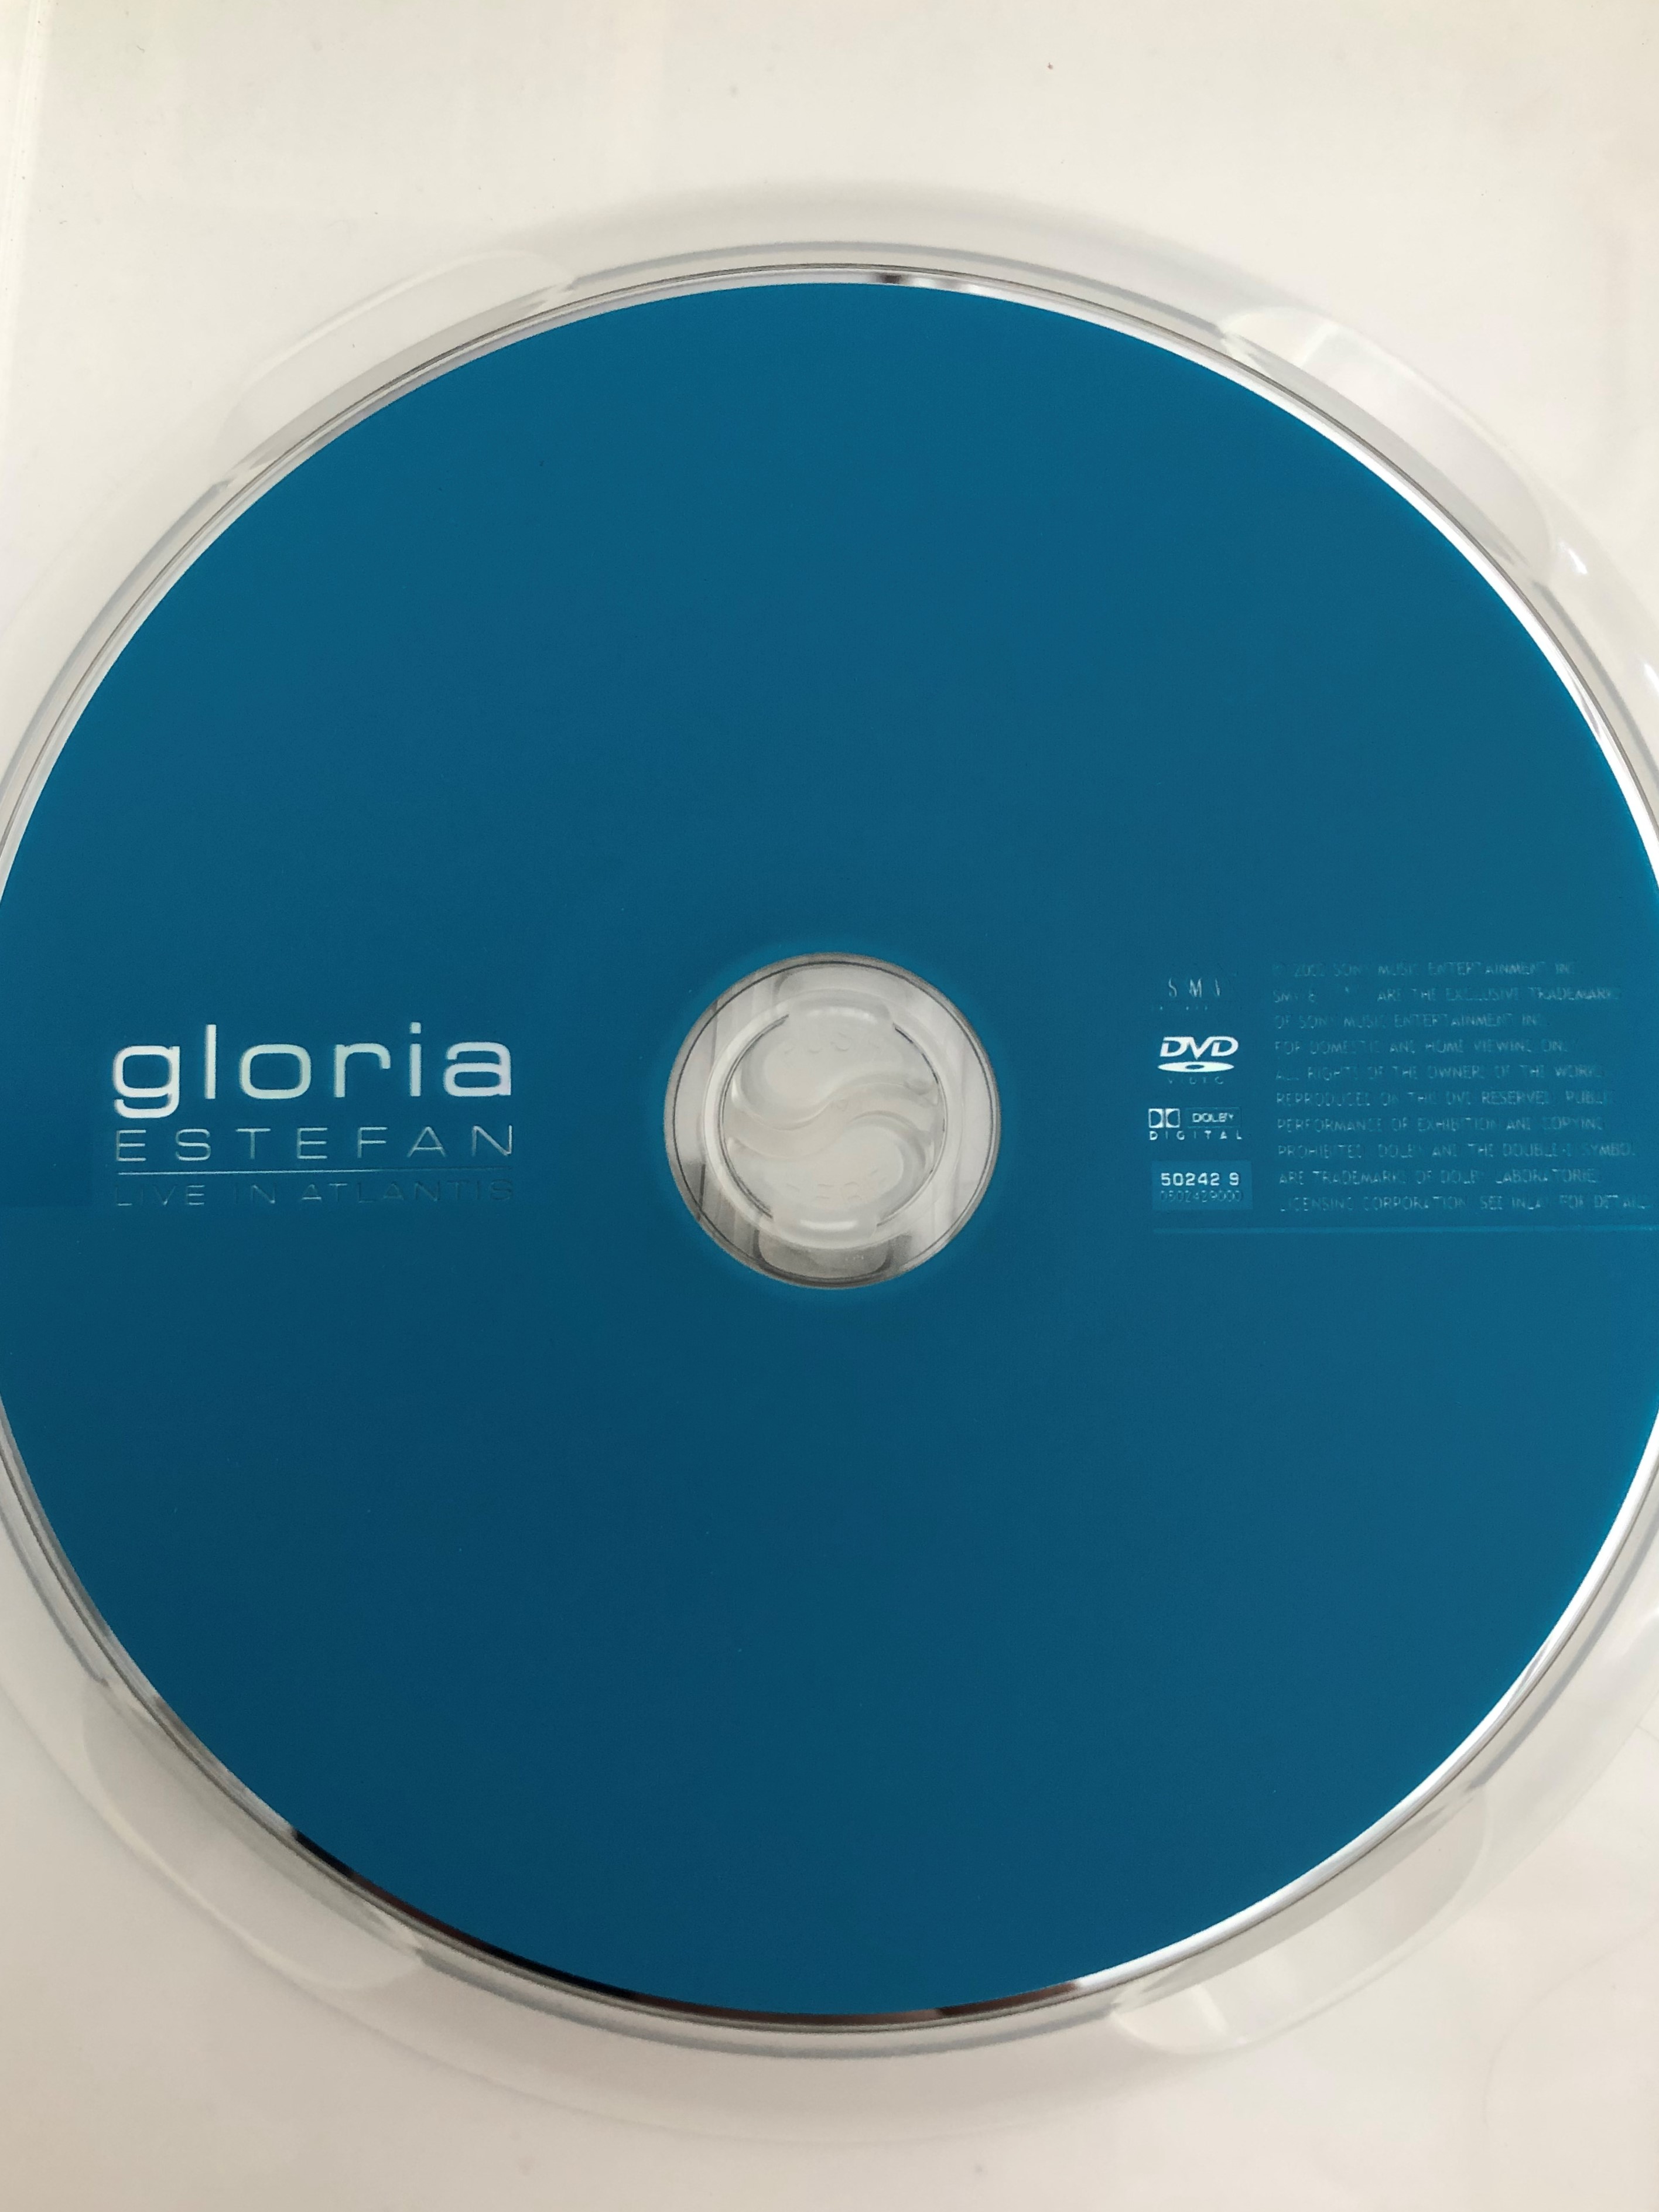 gloria-estefan-live-in-atlantis-dvd-2002-biography-complete-discography-conga-get-on-your-feet-mi-tierra-smv-50242-9-2-.jpg